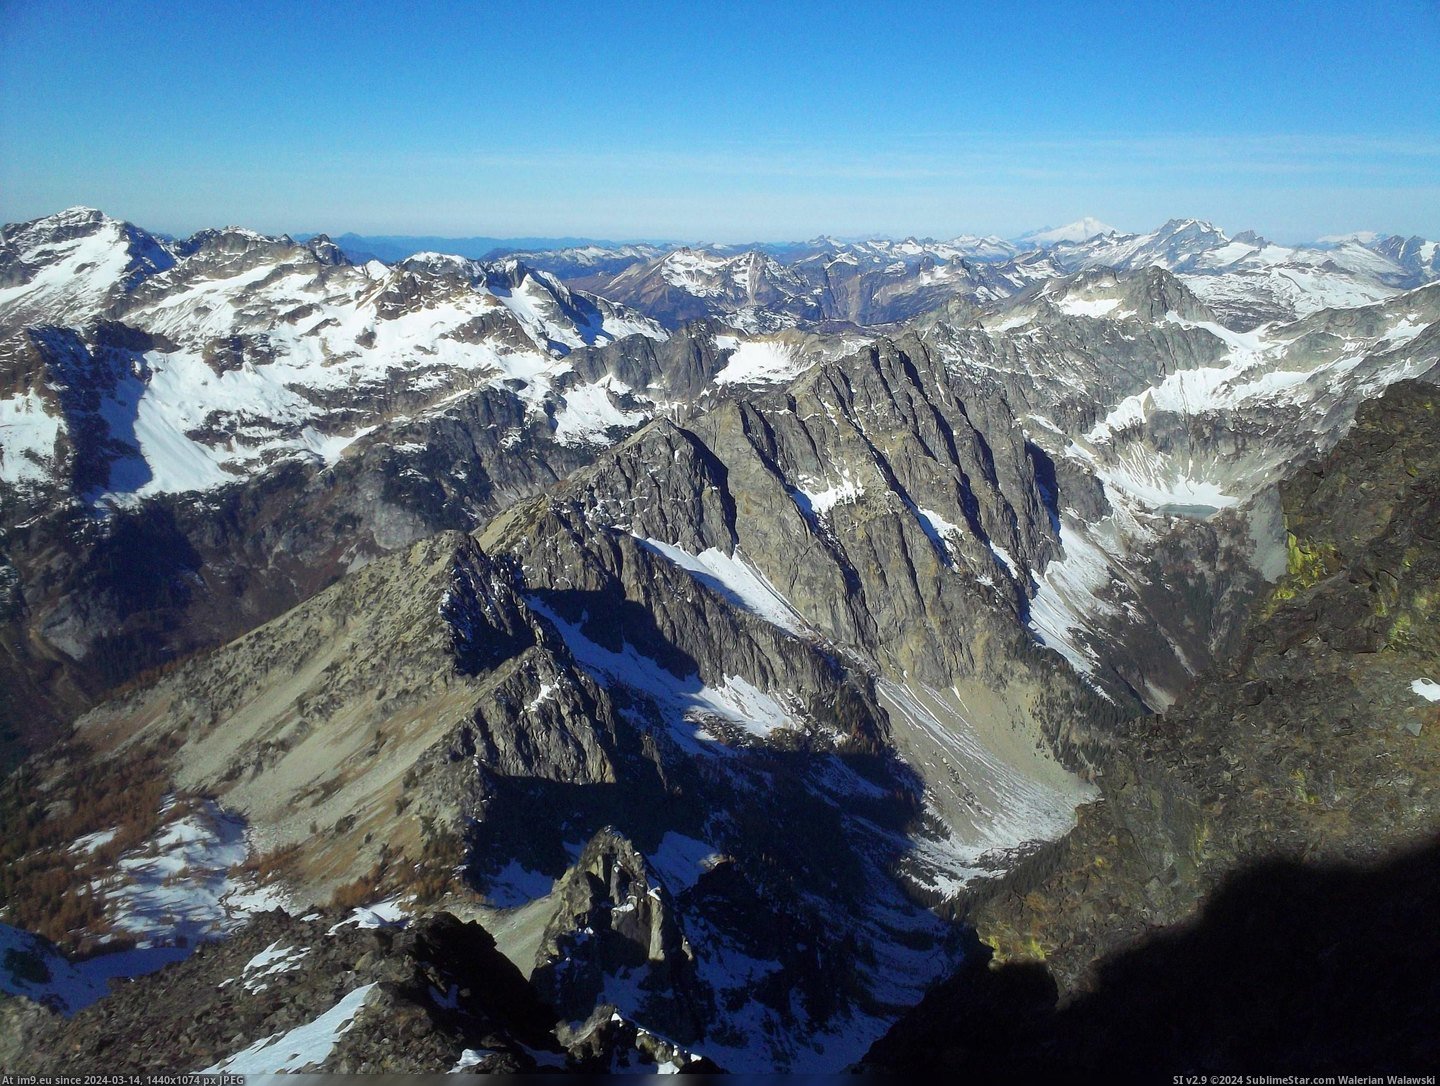 #Range #Jack #Cascade #2800x2100 #Fingered #Summit [Earthporn] Cascade Range from the summit of Seven Fingered Jack - 9101' - [2800x2100][OC] Pic. (Bild von album My r/EARTHPORN favs))